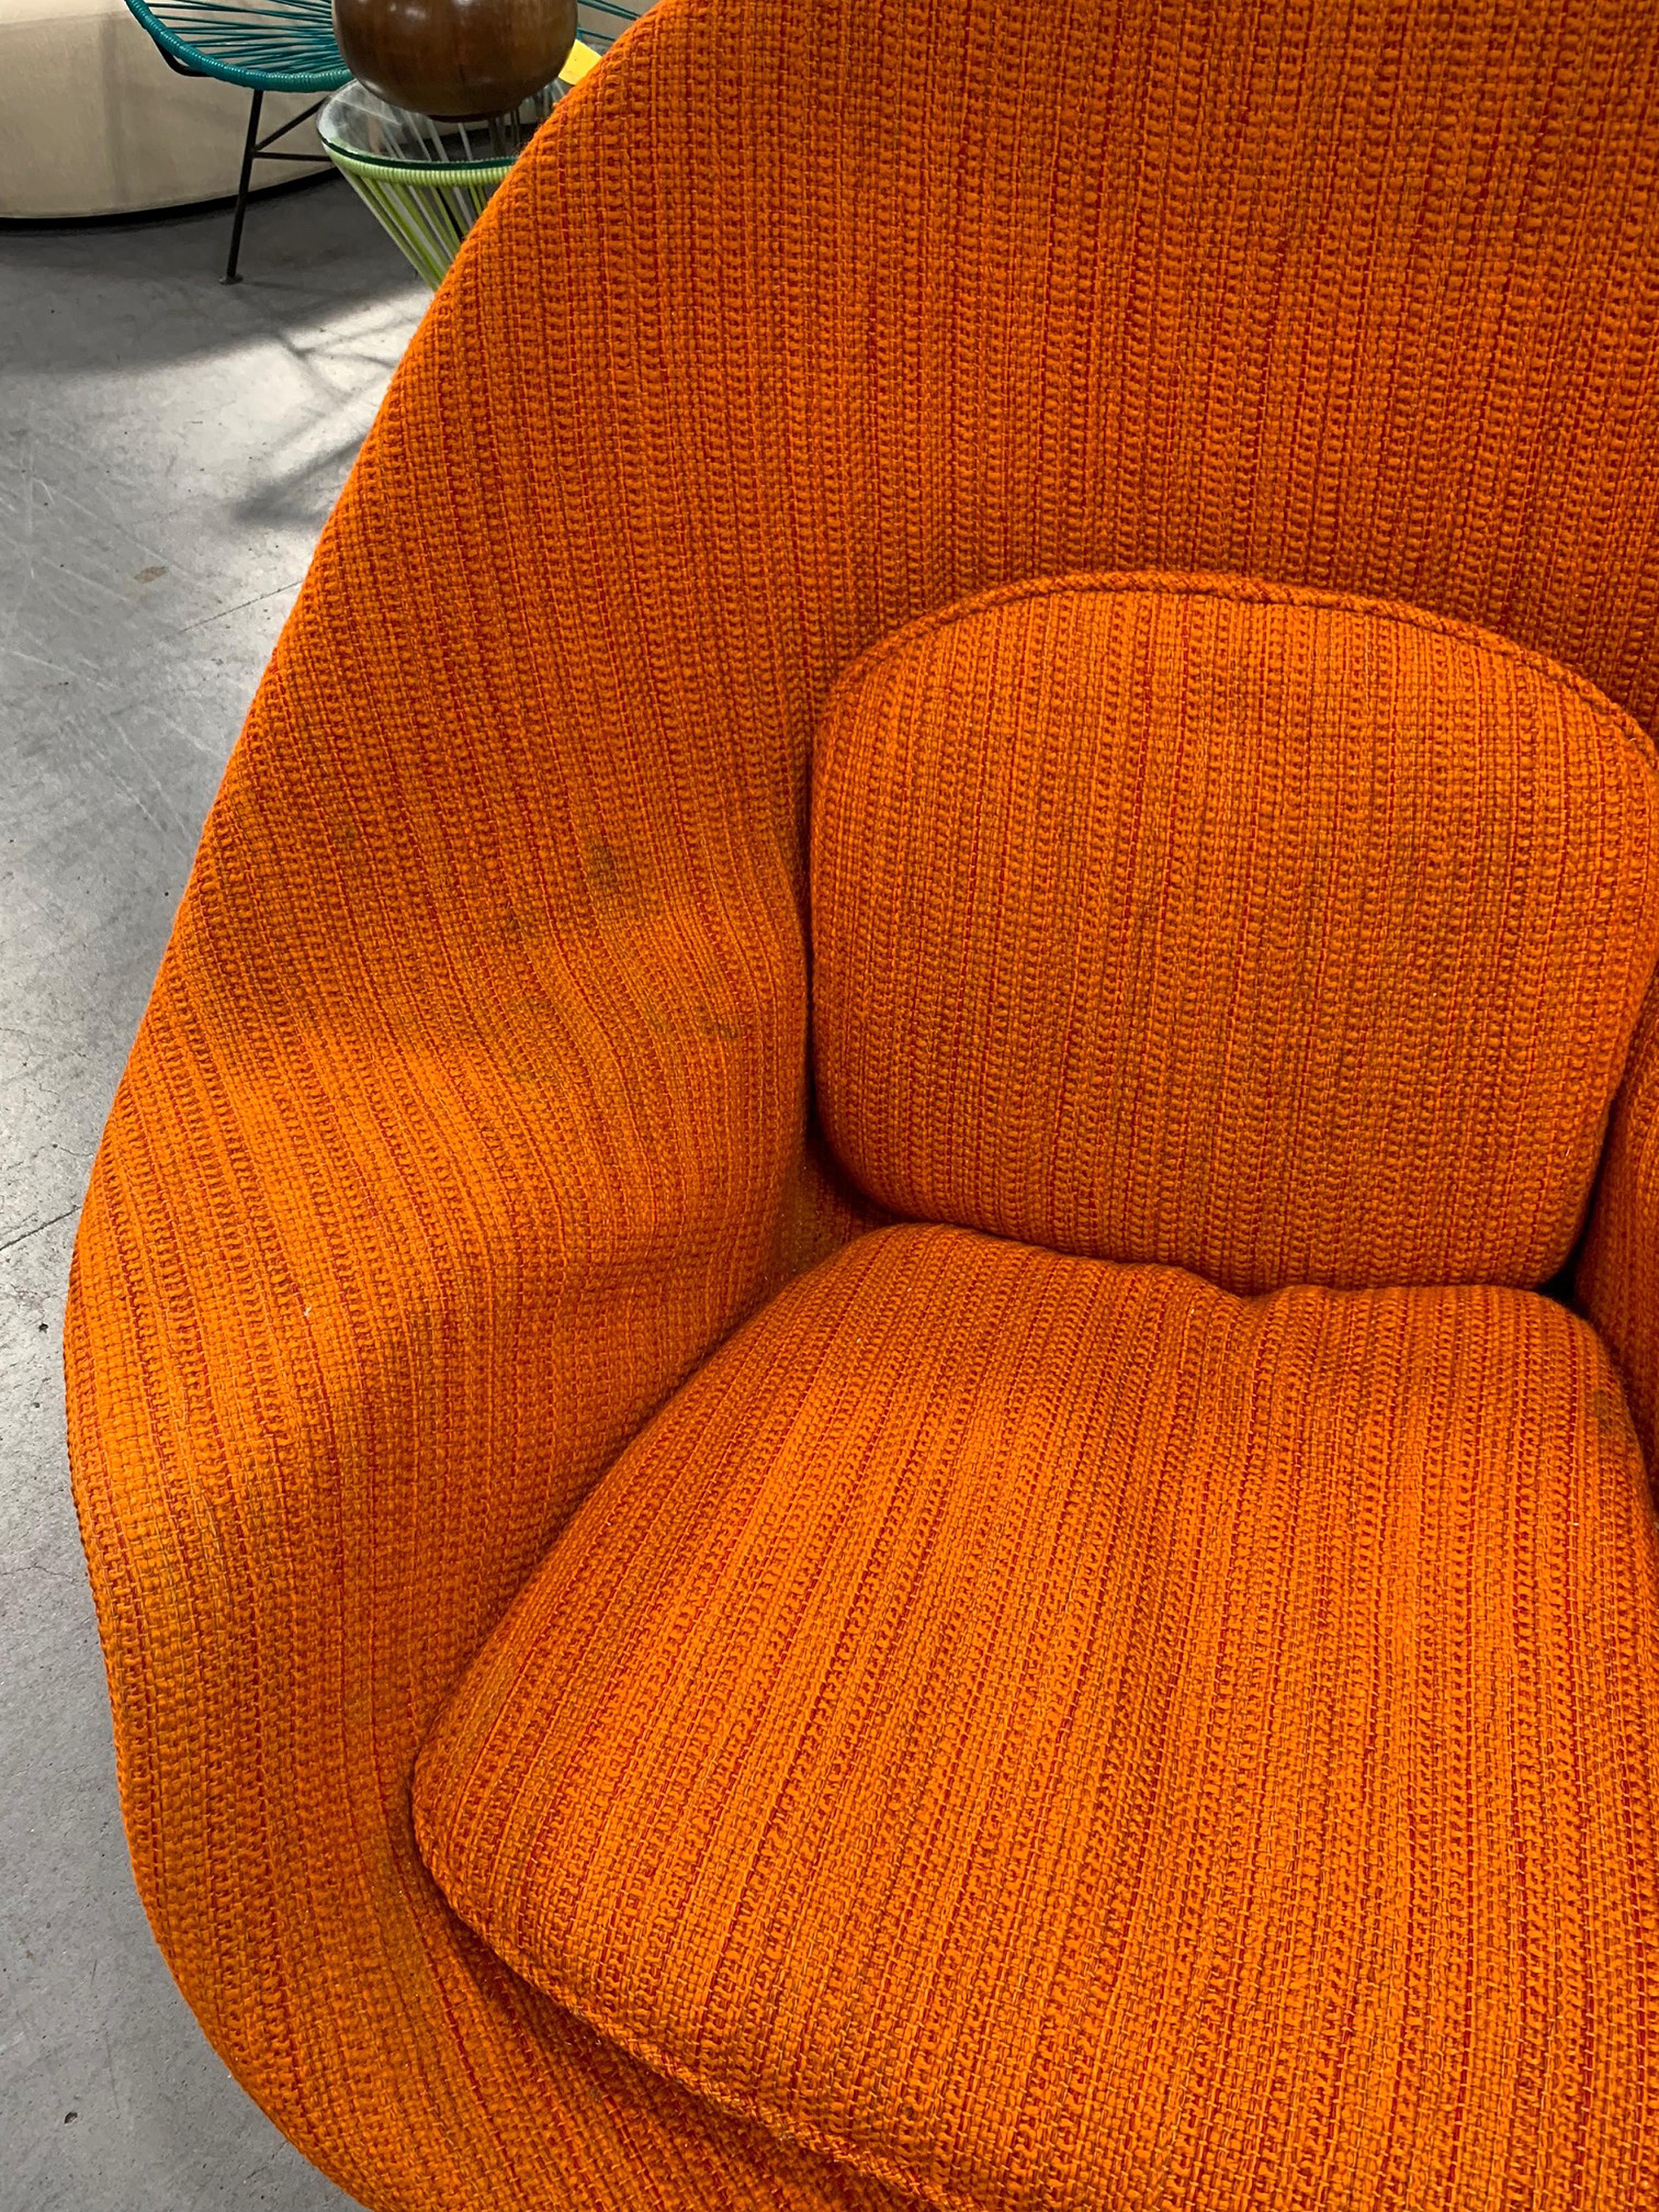 Eero Saarinen Womb Chair with Original Upholstery and Steel Frame 2